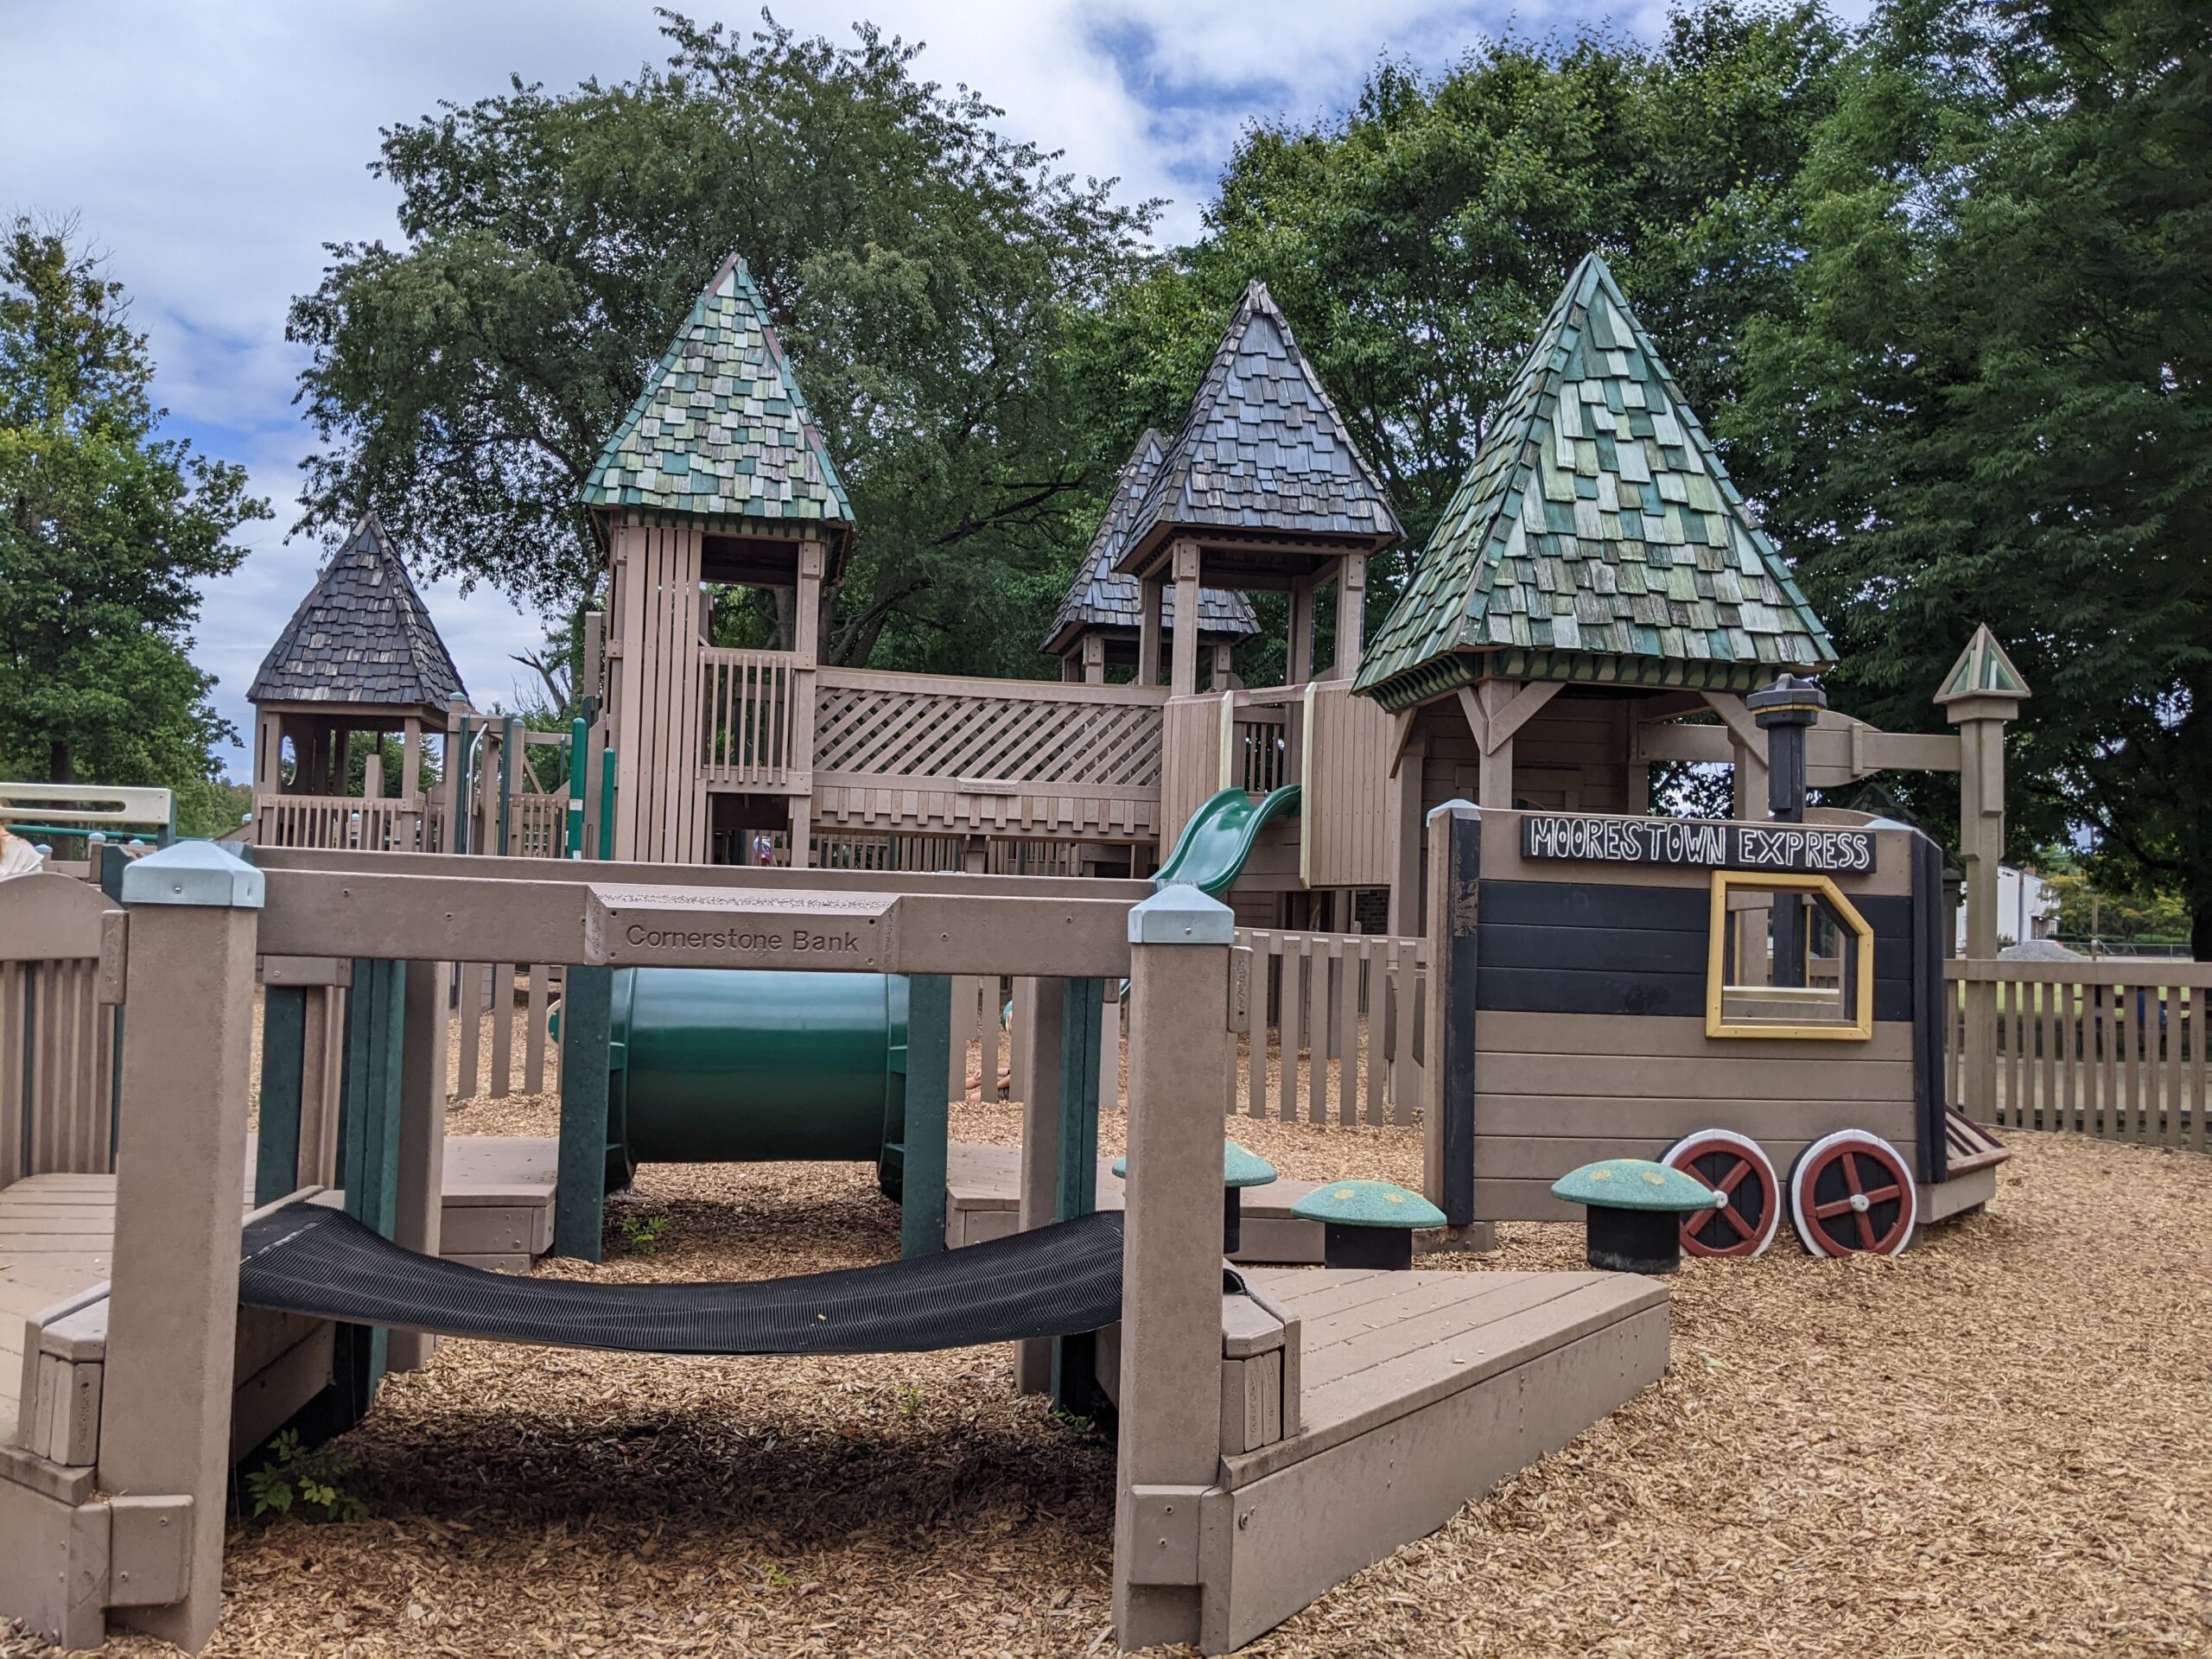 Frank Fullerton Memorial Park Playground in Moorestown NJ - WIDE image - back of preschool playground